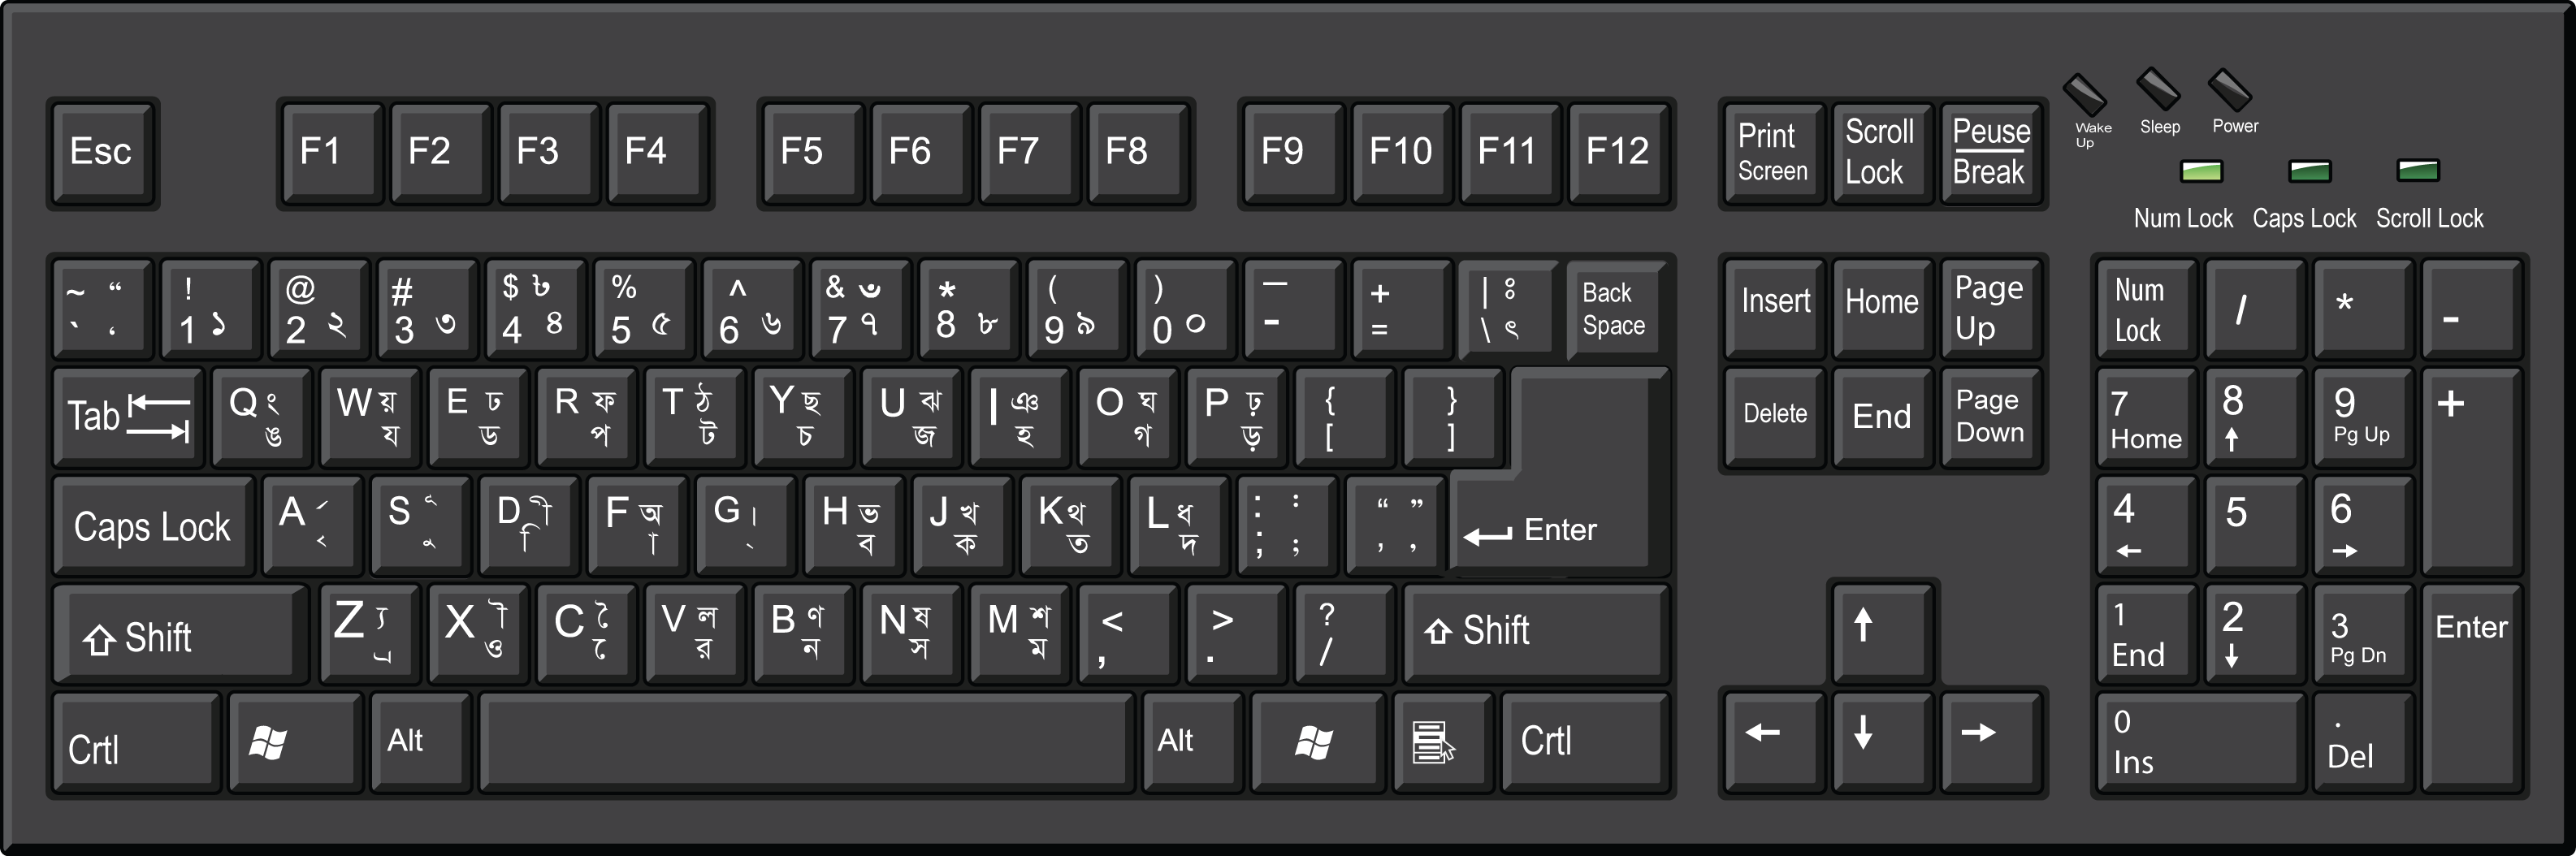 Microban® Basic 104 Keyboard